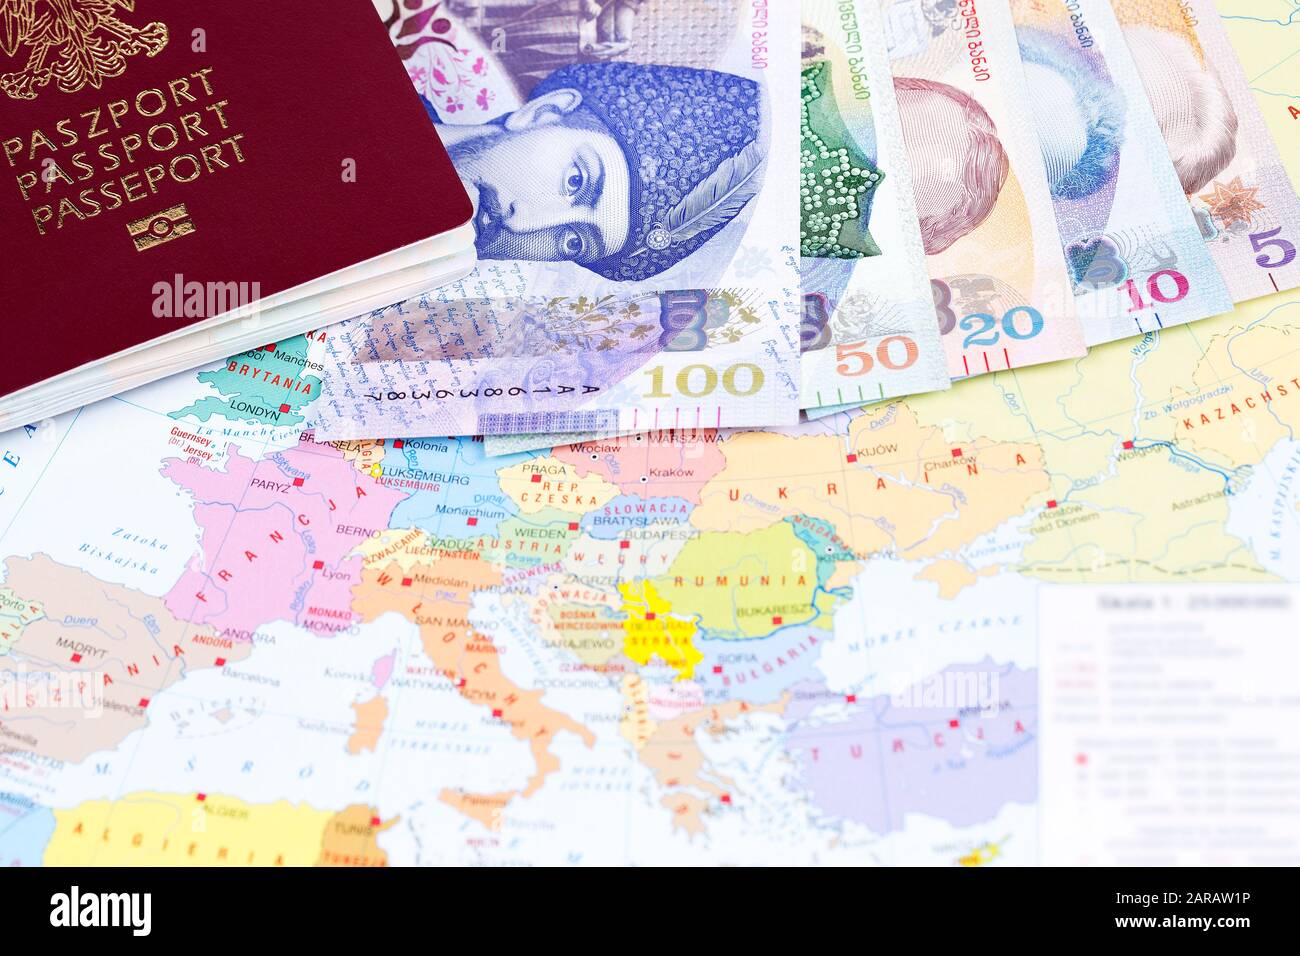 Passport with Georgian money on the map background Stock Photo